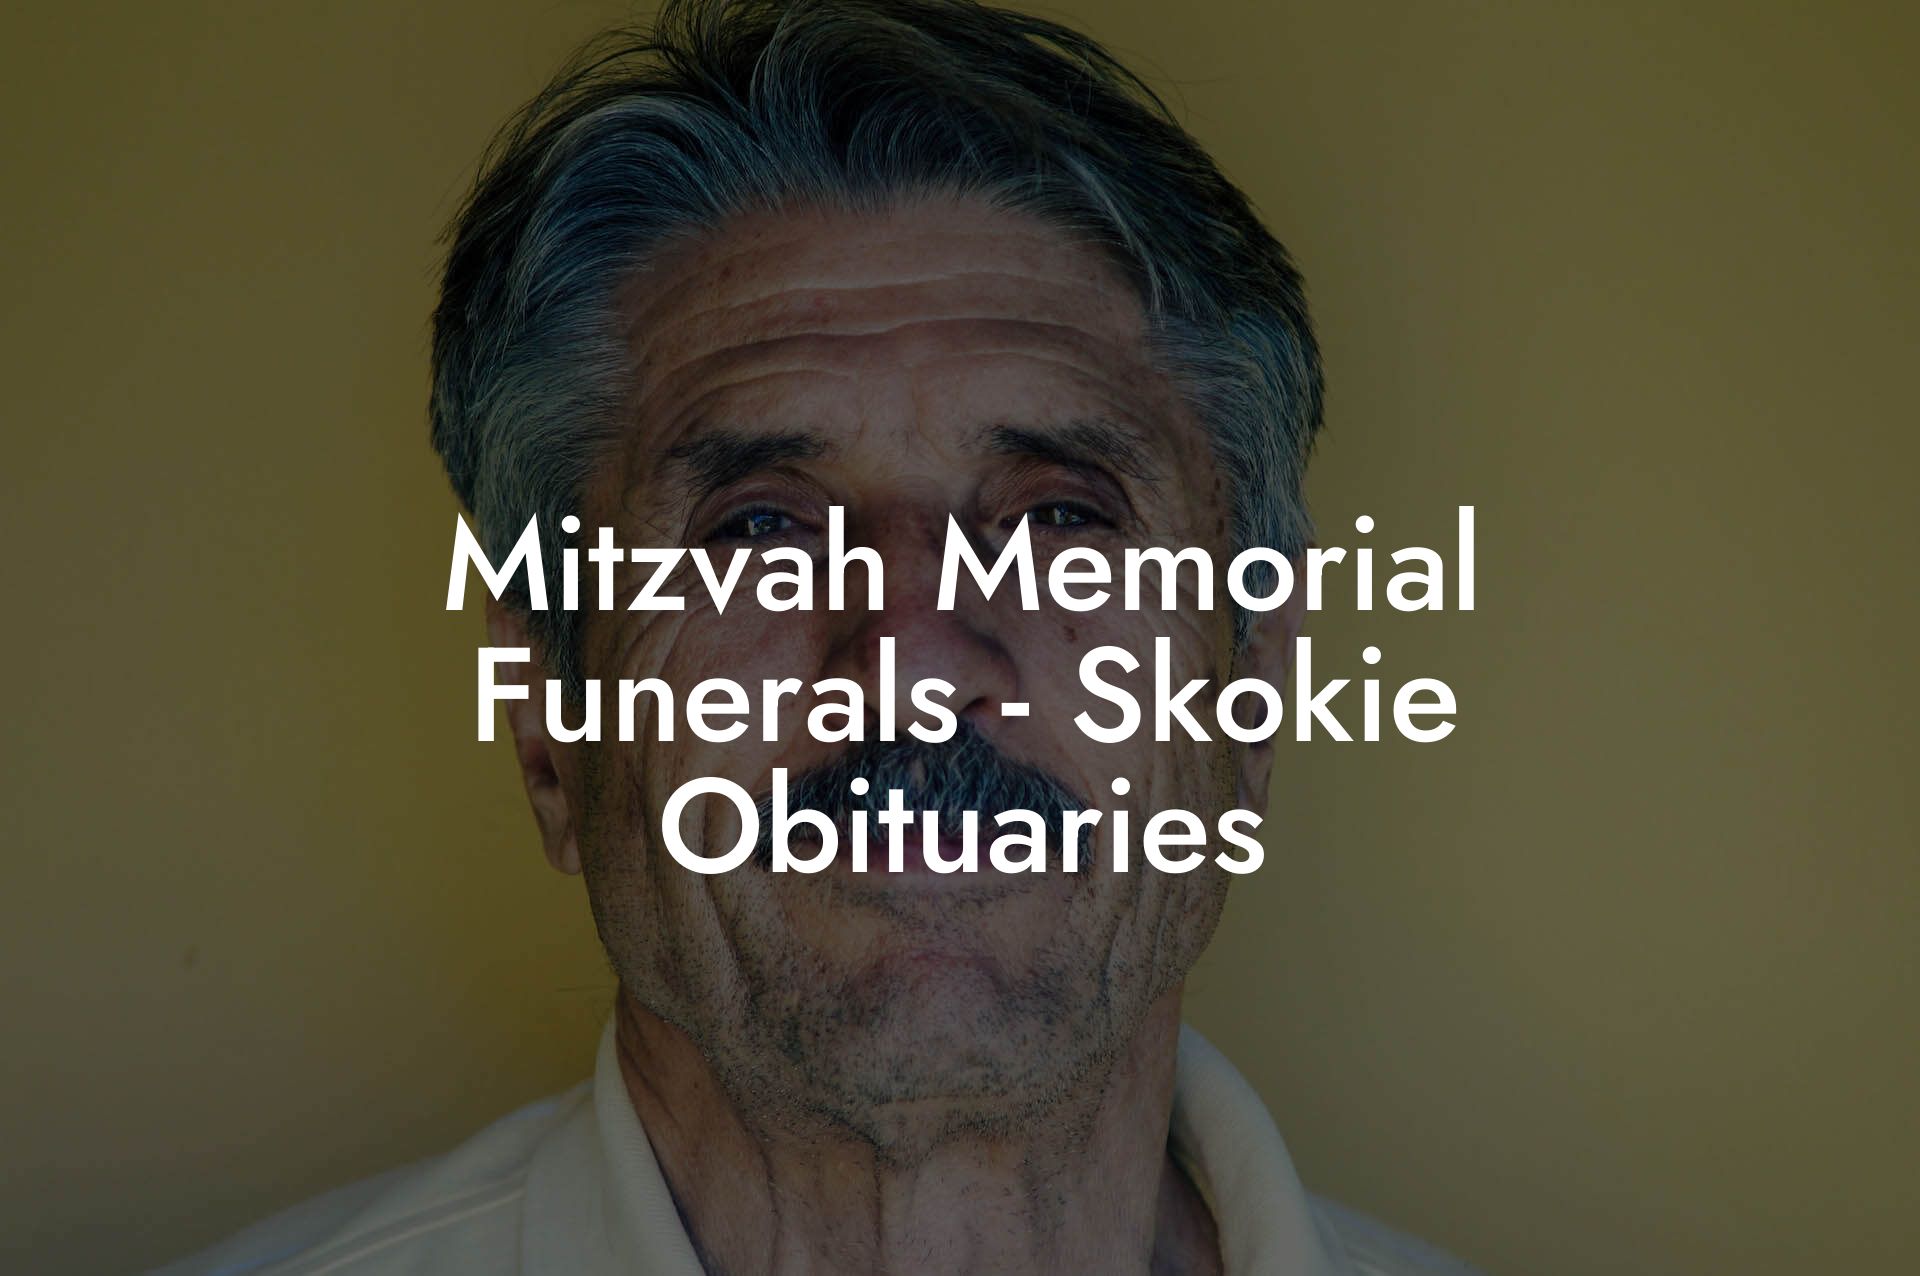 Mitzvah Memorial Funerals - Skokie Obituaries